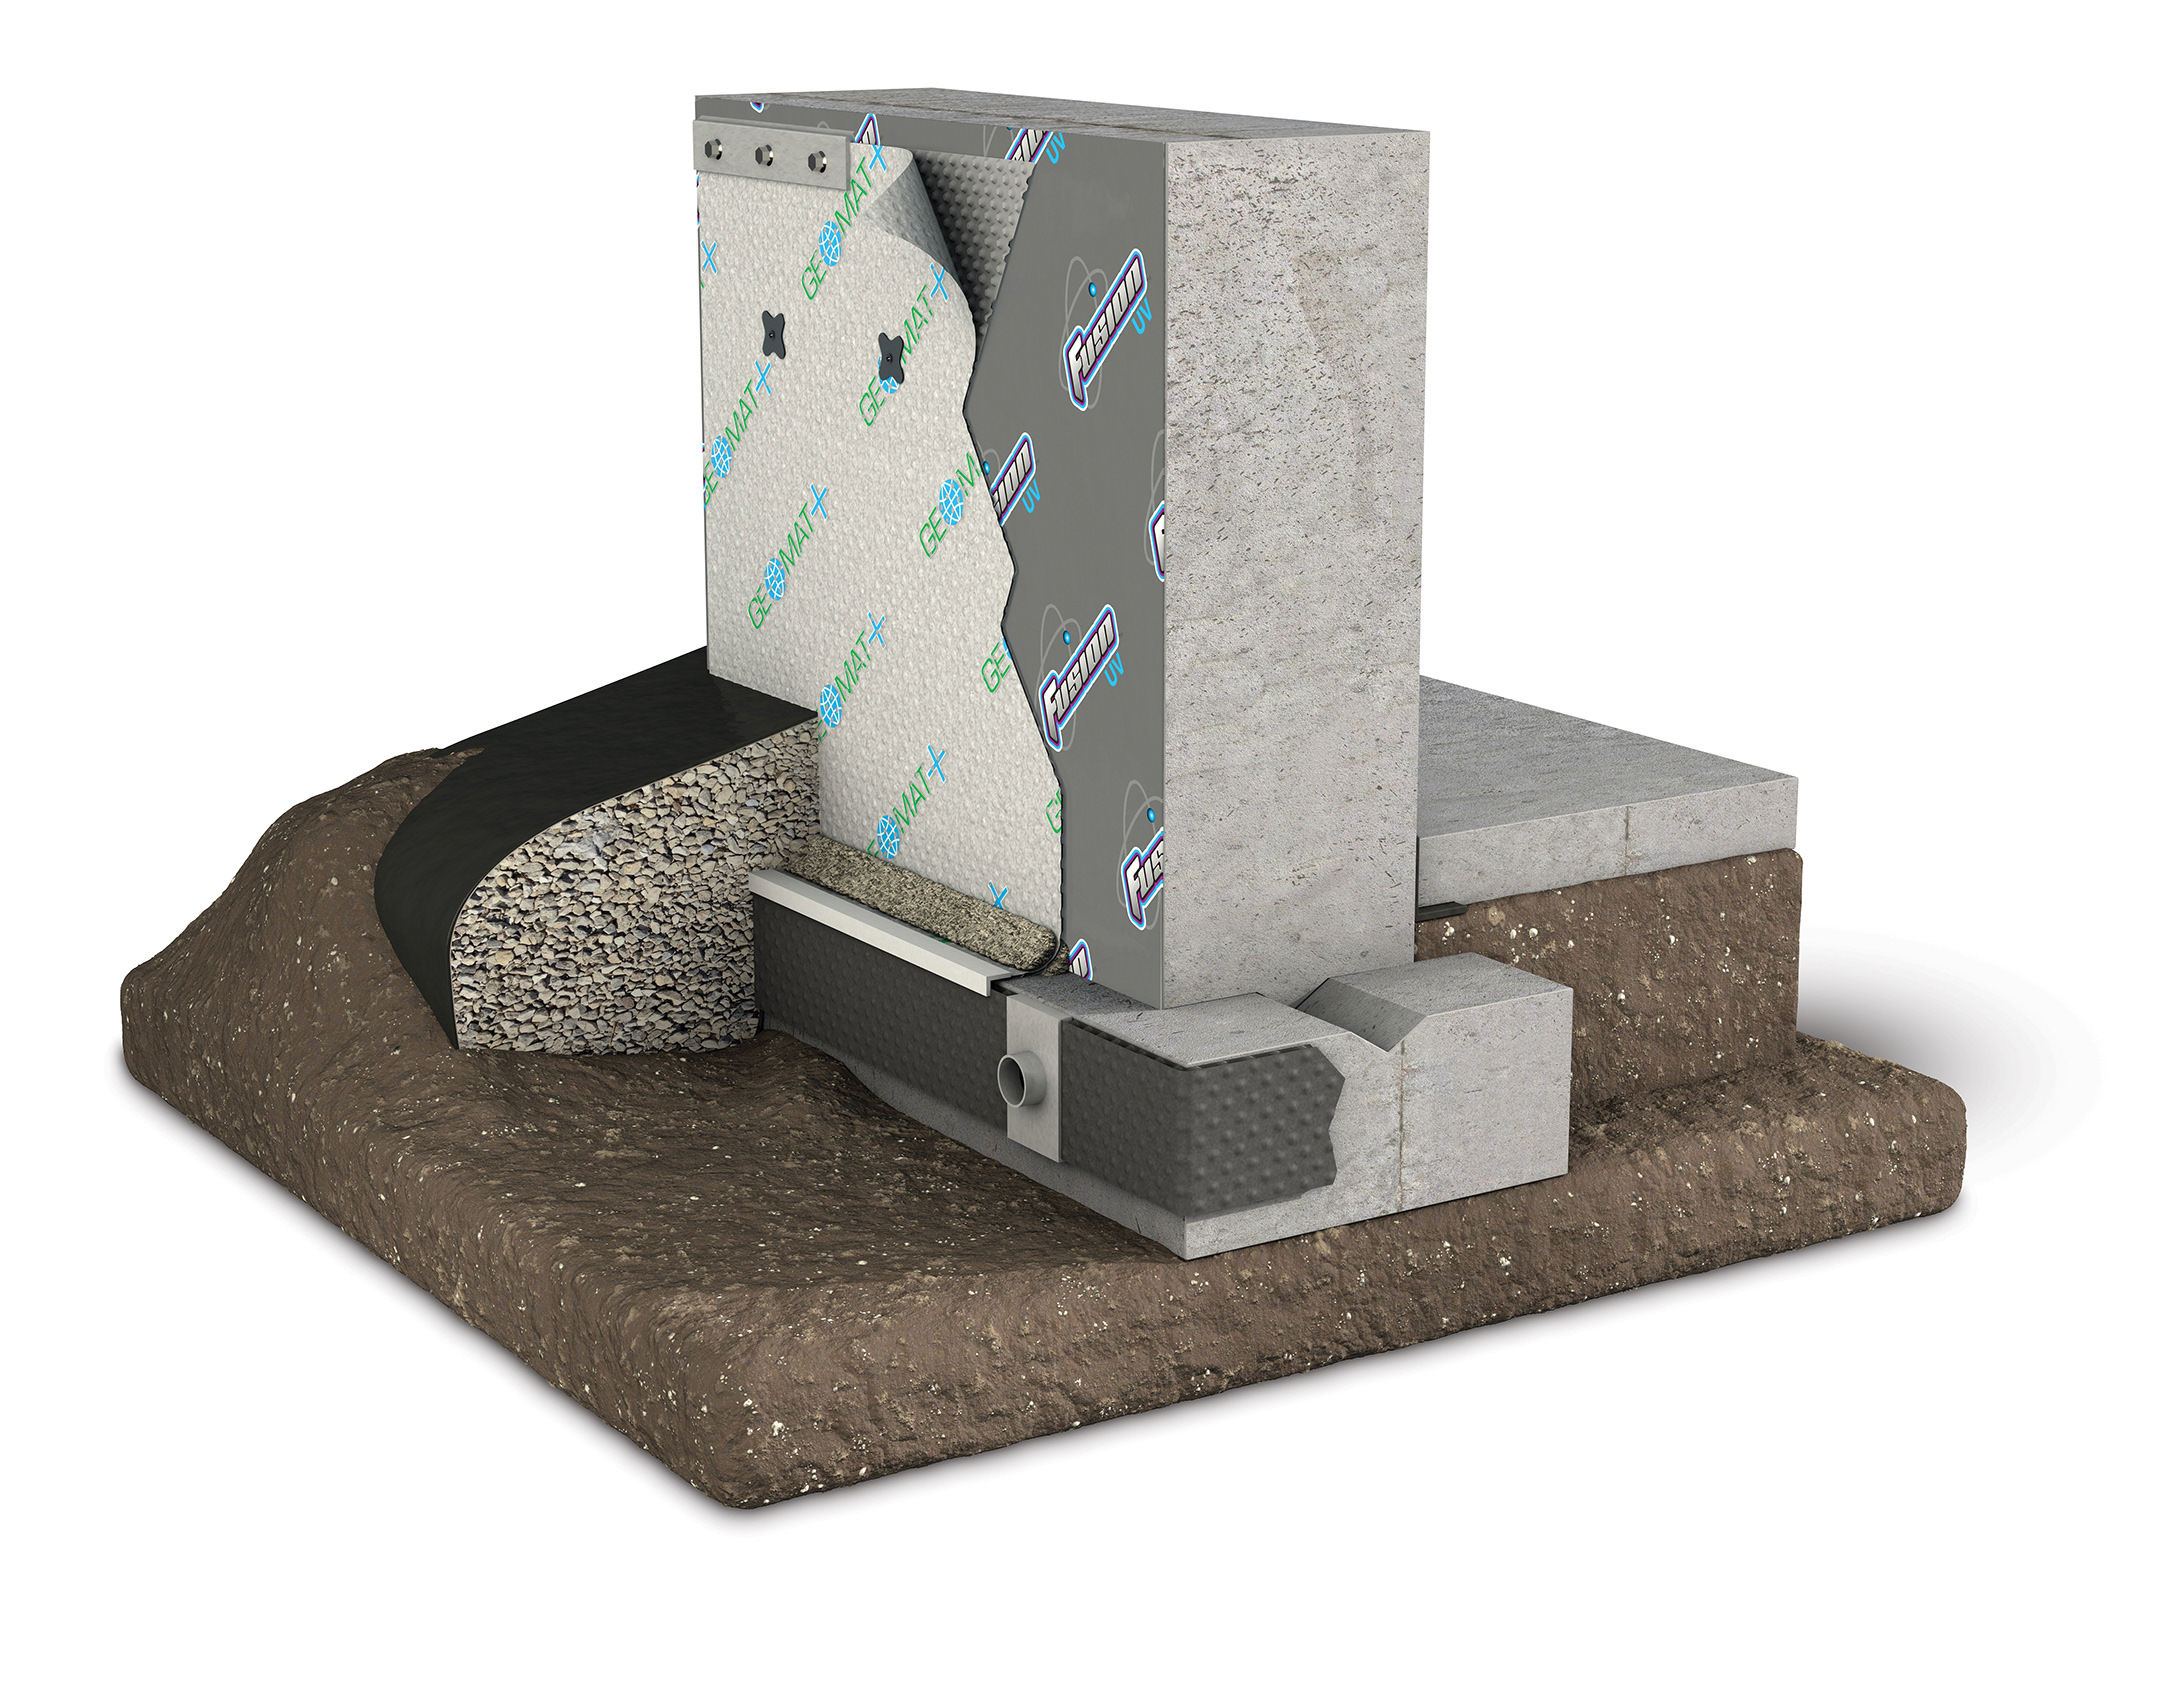 GeoMat Drainage Board - Mar-flex Waterproofing & Building Products